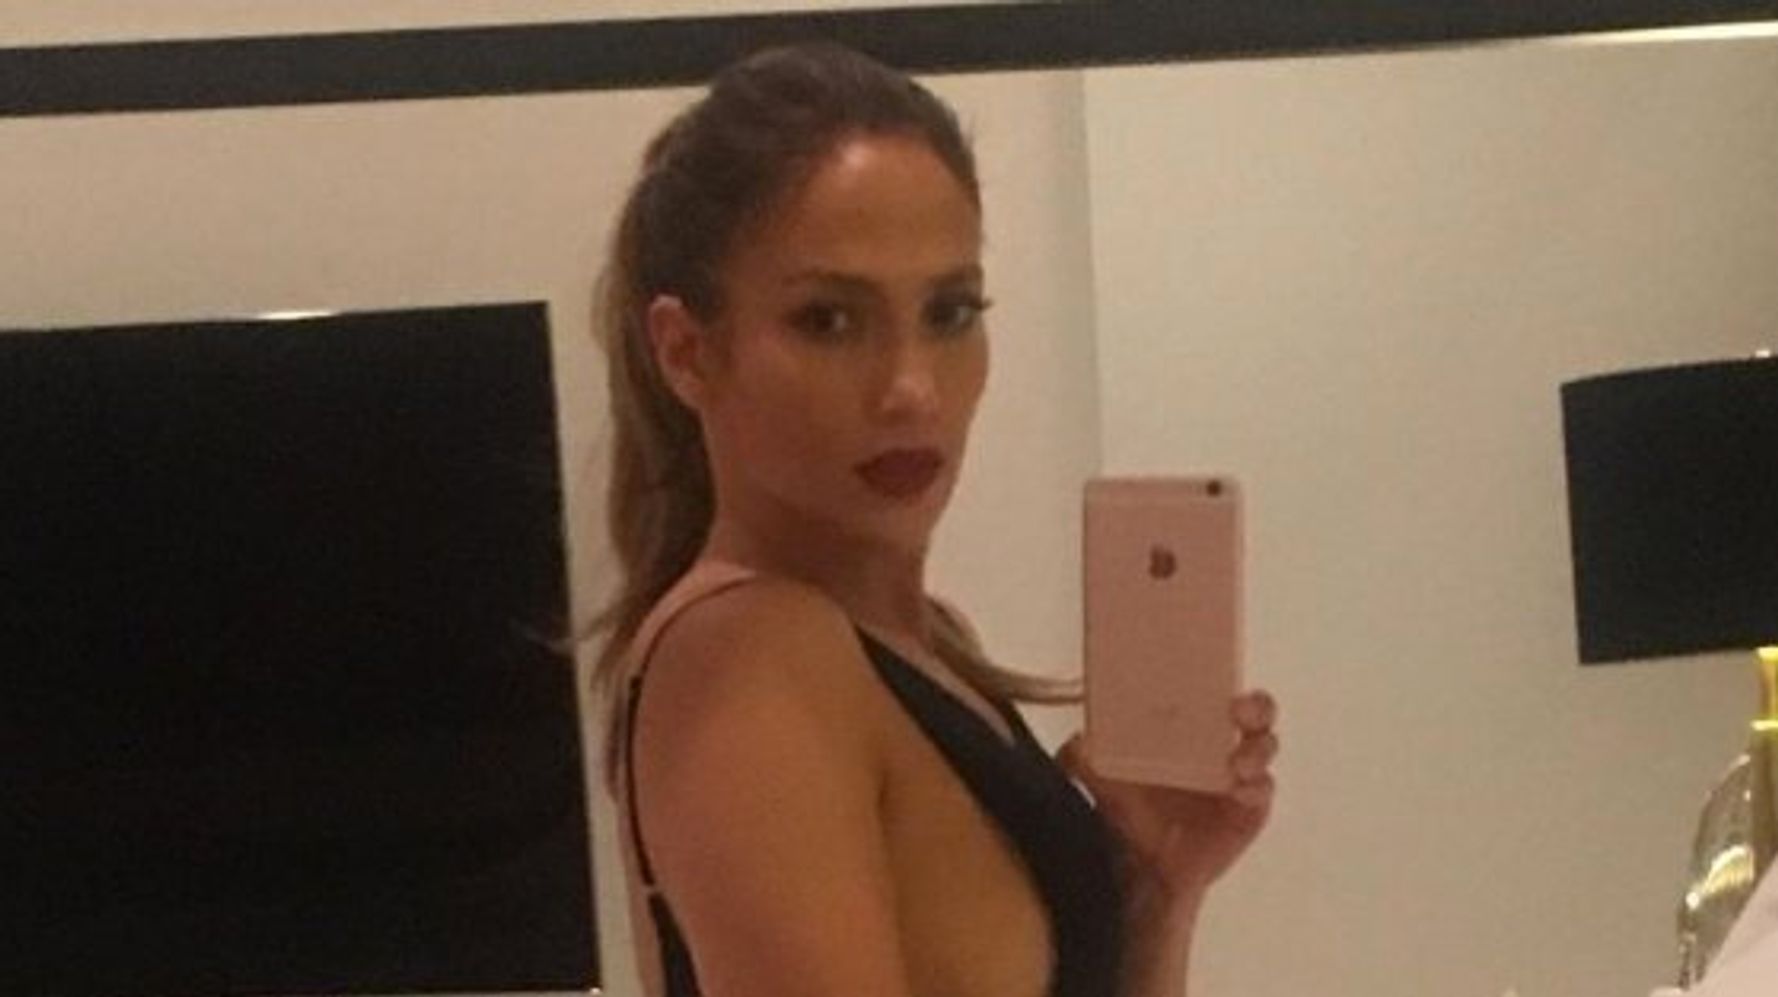 Jennifer Lopez Various Sexy And Naughty Selfie Photos 